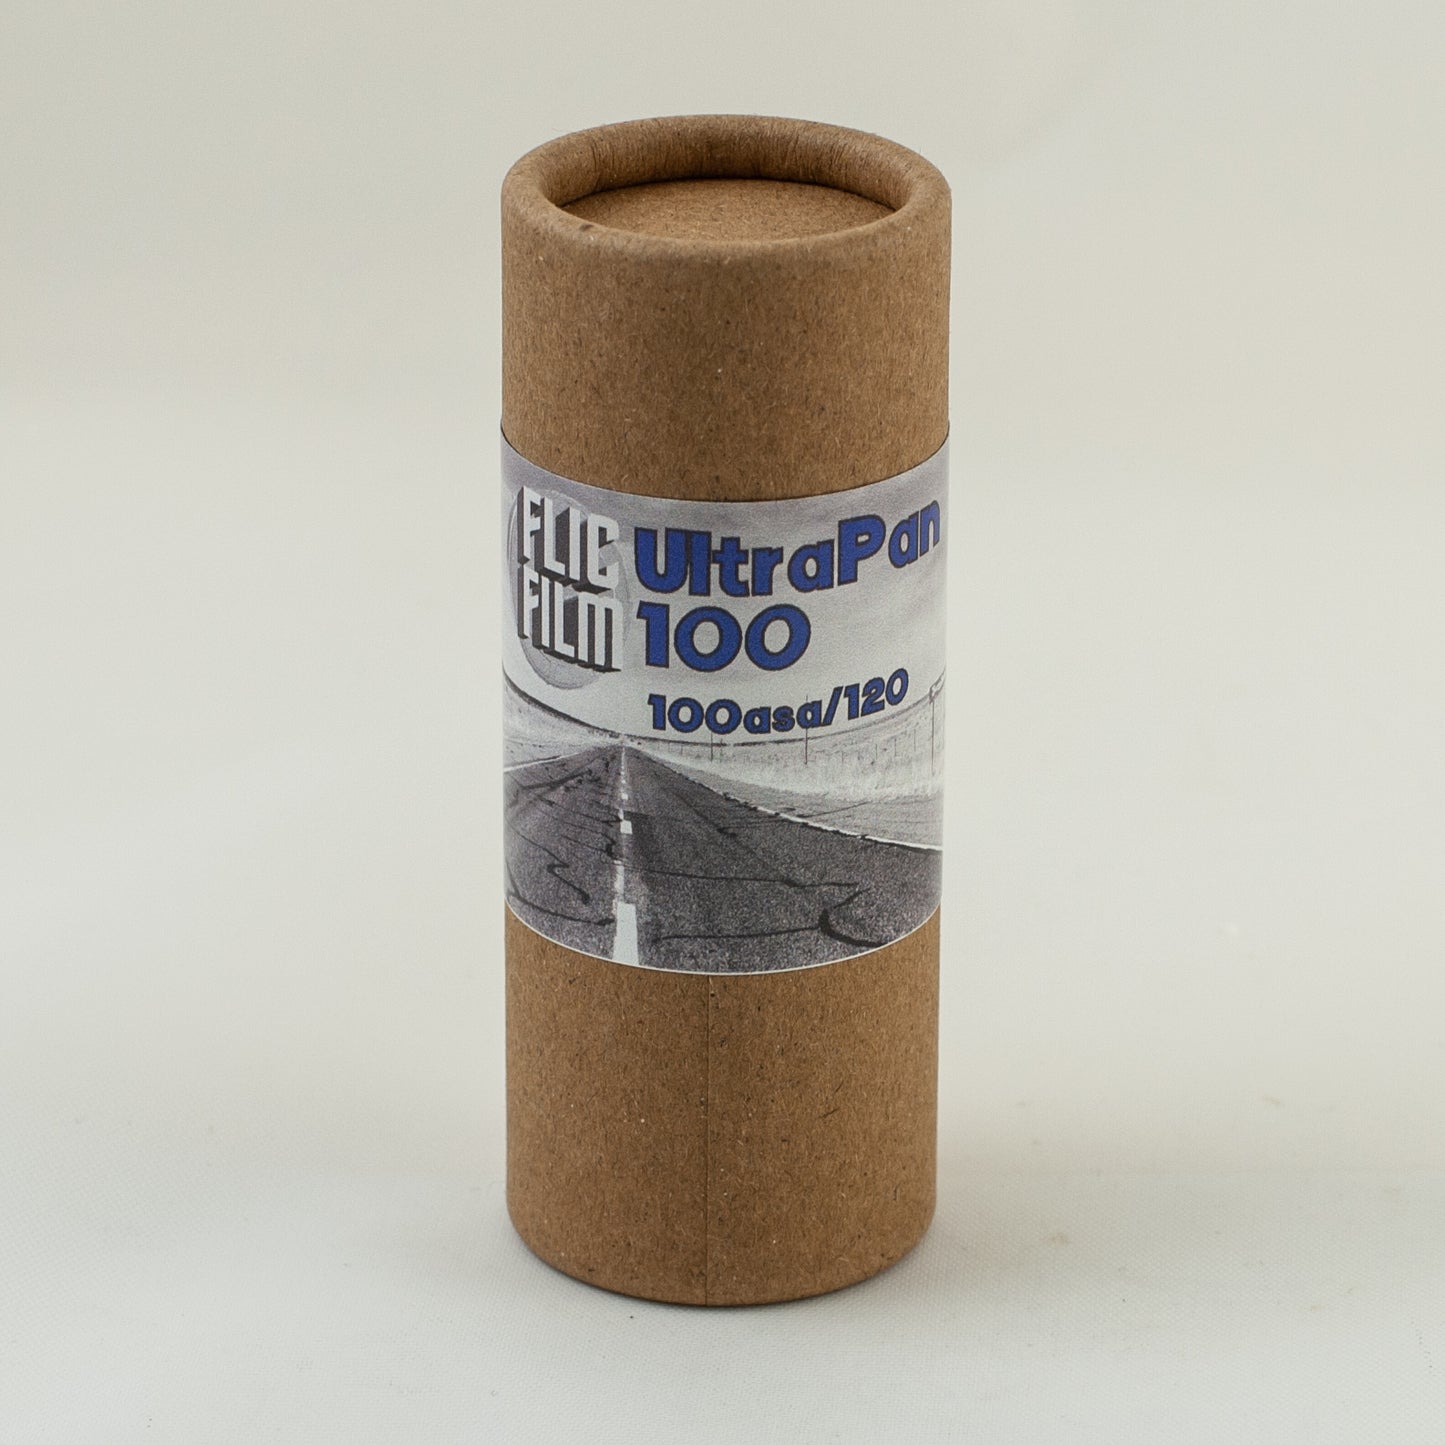 Film Flic - ULTRAPAN iso100 - 120